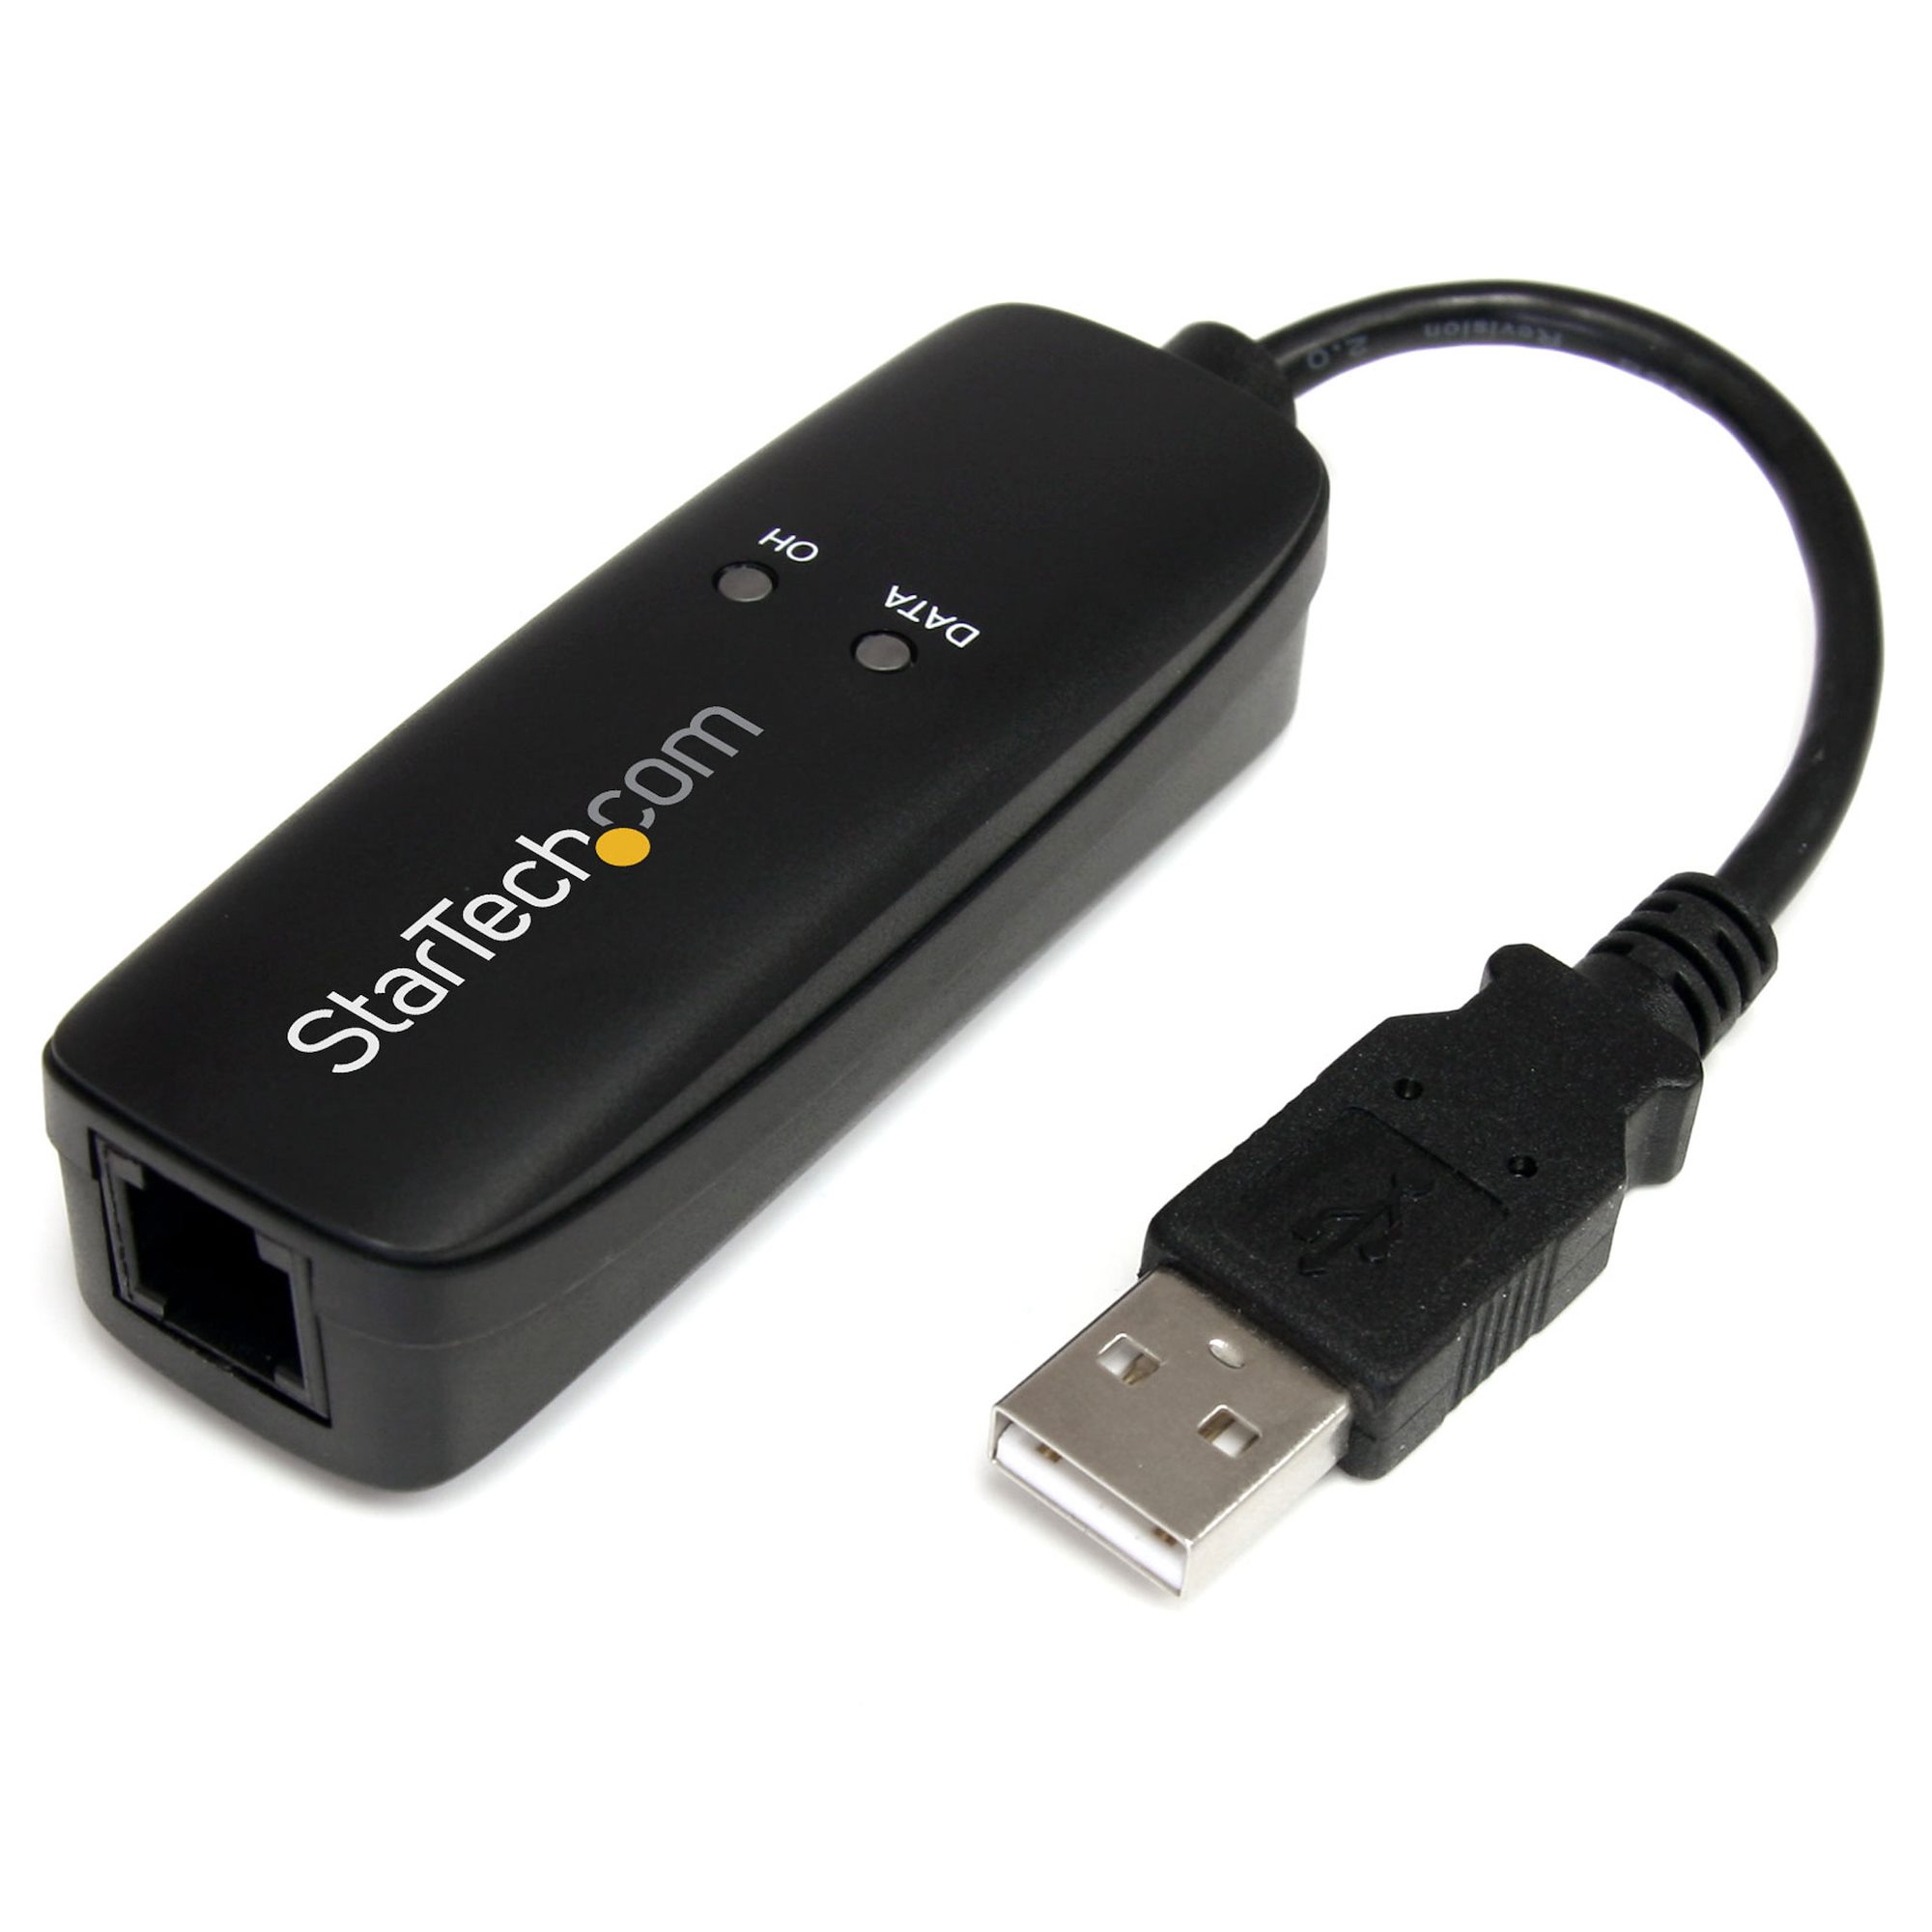 Hardware Based External 56K USB Modem - Bluetooth & Telecom Adapters StarTech.com